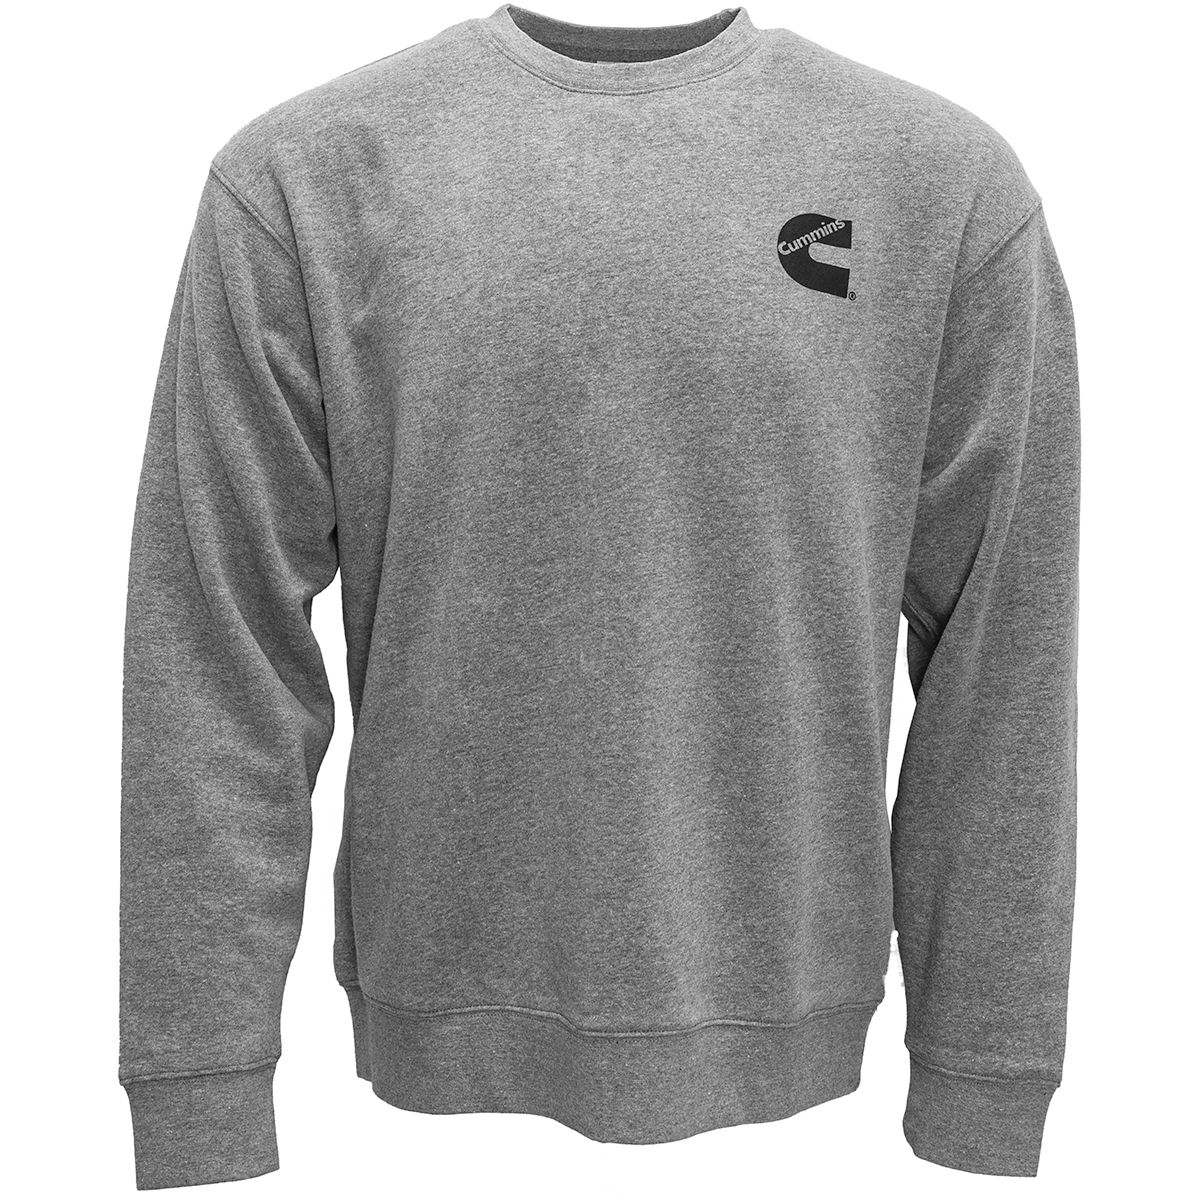 Cummins Unisex Fleece Crewneck Sweatshirt Gray in Comfy Cotton Blend 2XL CMN5026